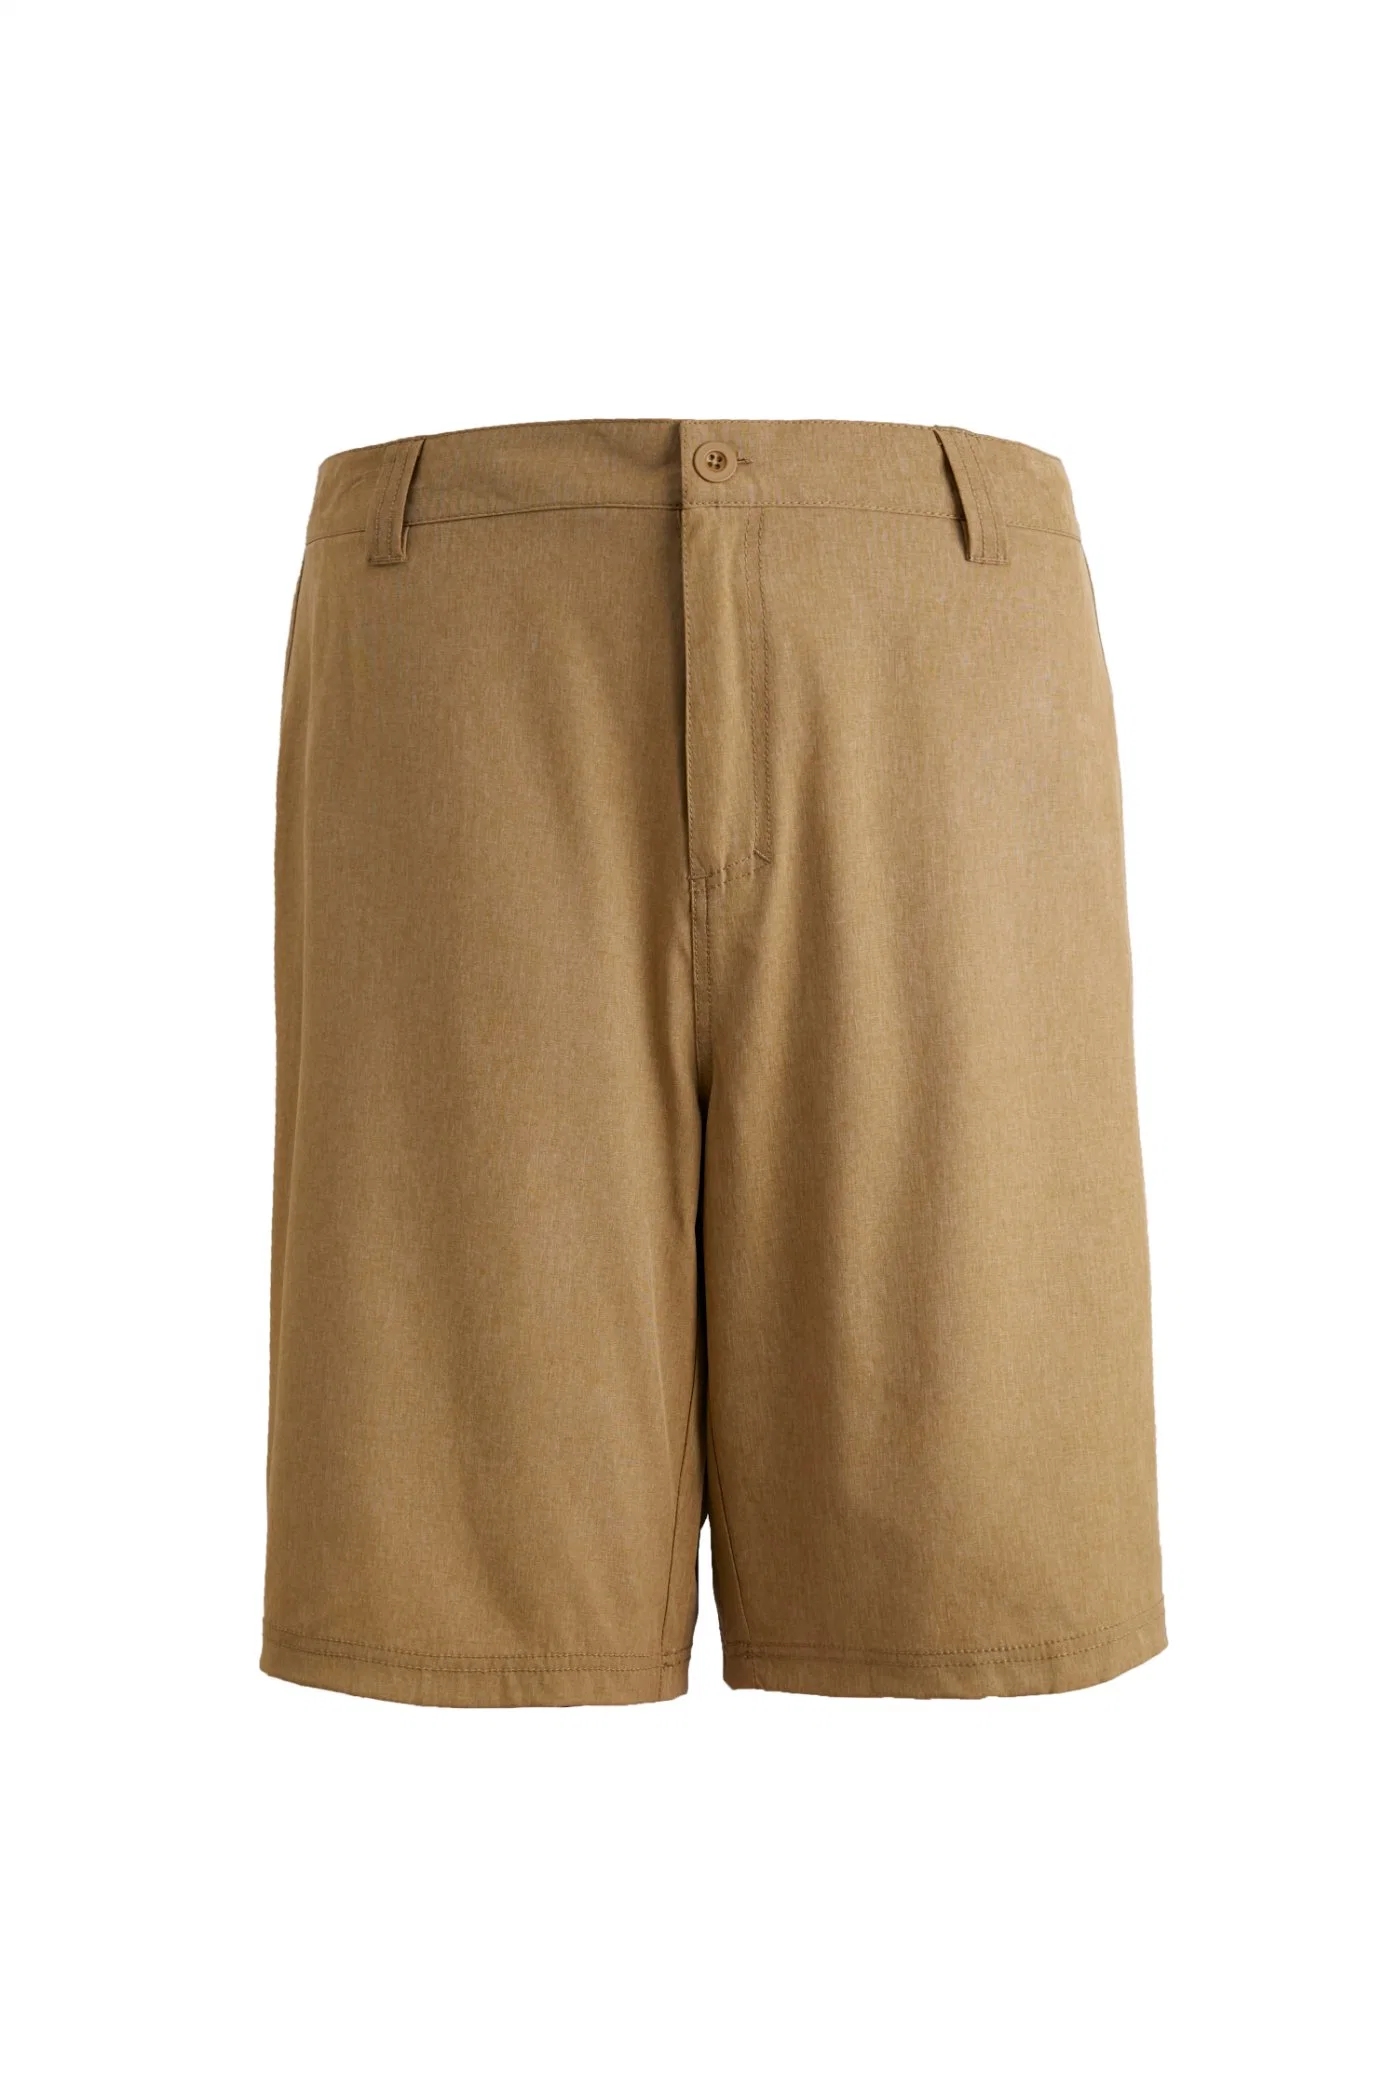 Men's Summer Popular Fashion Sport Style Shorts Customize Color Garment